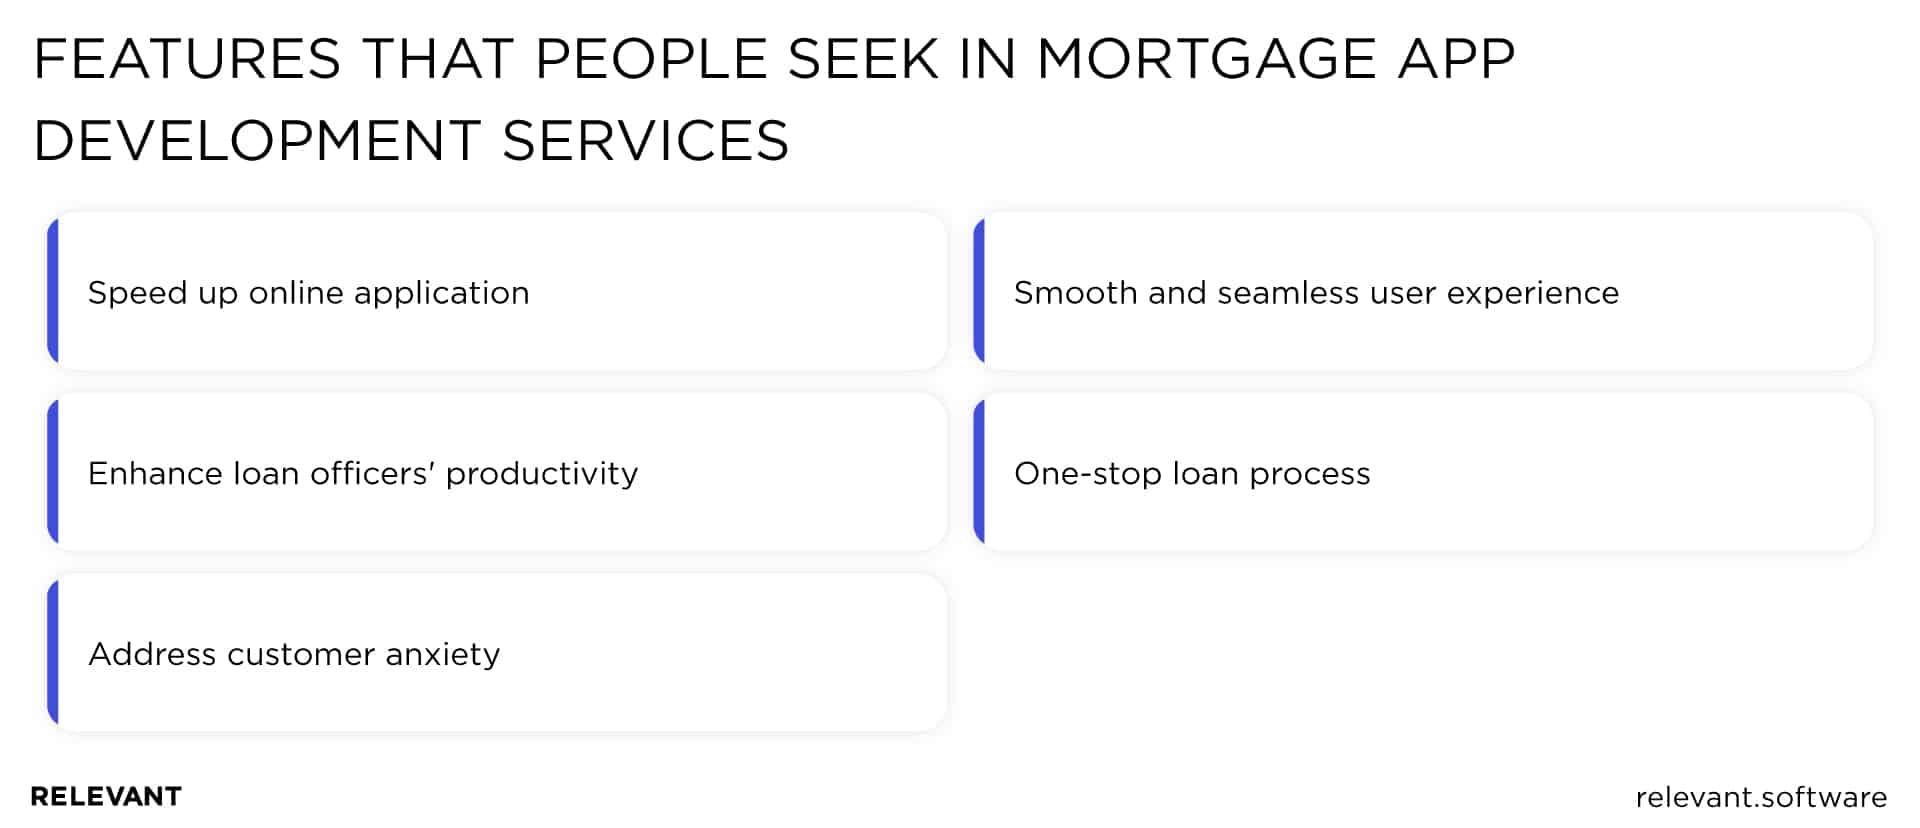 Mortgage app development services features